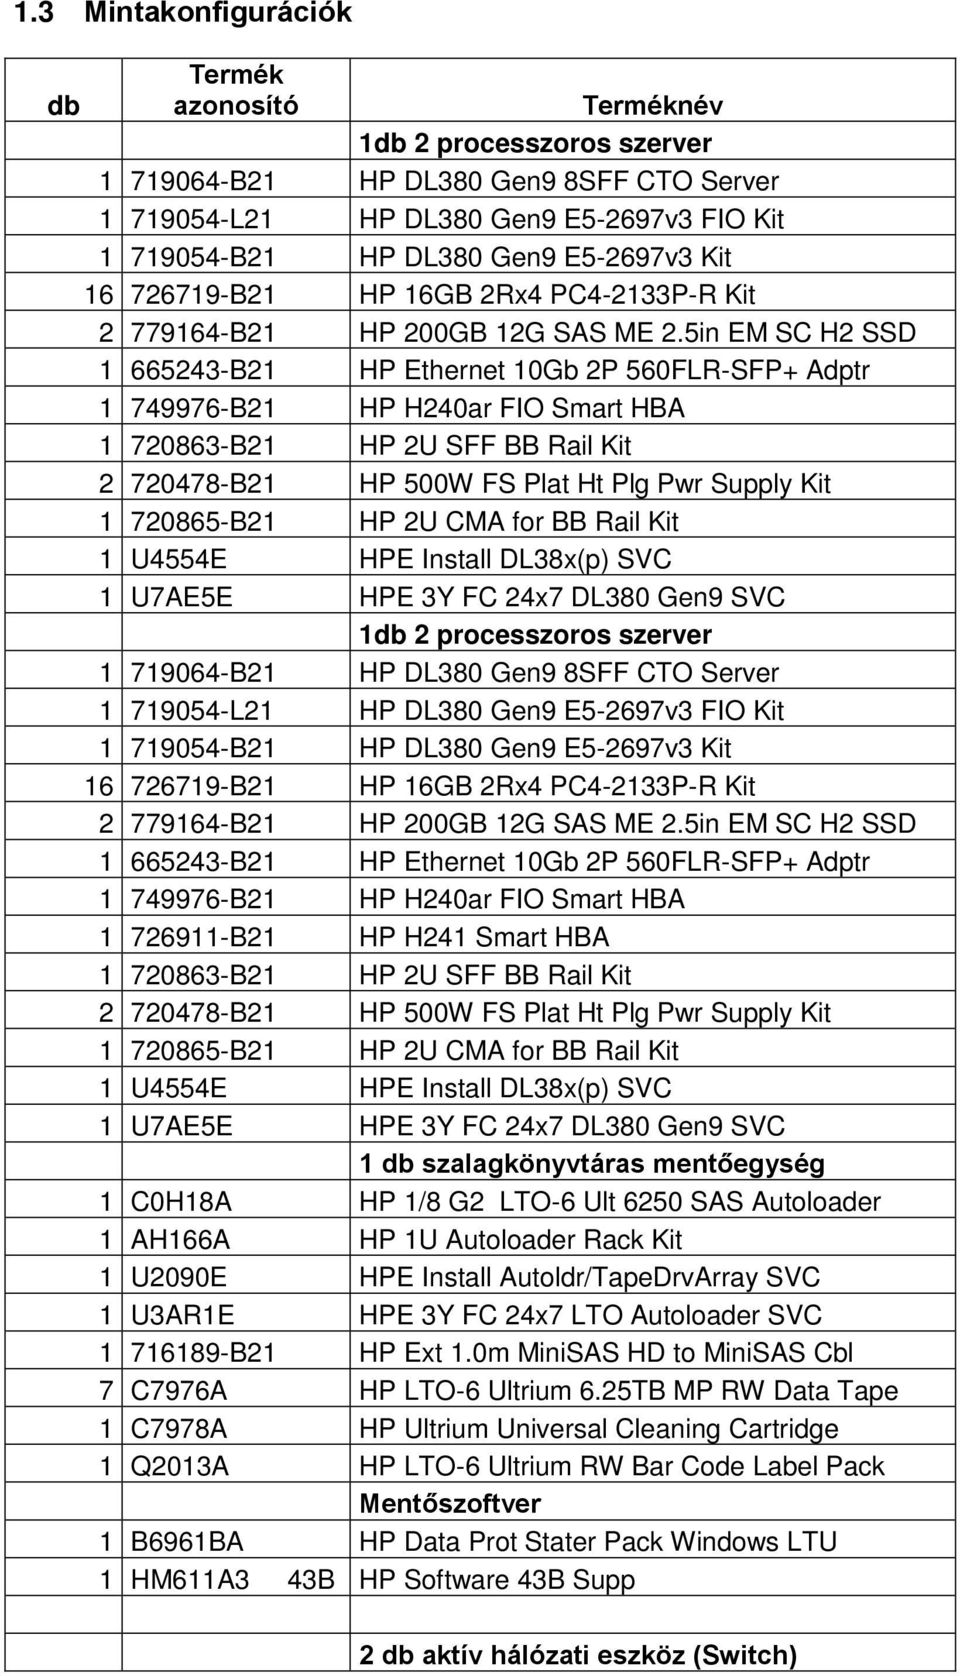 5in EM SC H2 SSD 1 665243-B21 HP Ethernet 10Gb 2P 560FLR-SFP+ Adptr 1 749976-B21 HP H240ar FIO Smart HBA 1 720863-B21 HP 2U SFF BB Rail Kit 2 720478-B21 HP 500W FS Plat Ht Plg Pwr Supply Kit 1